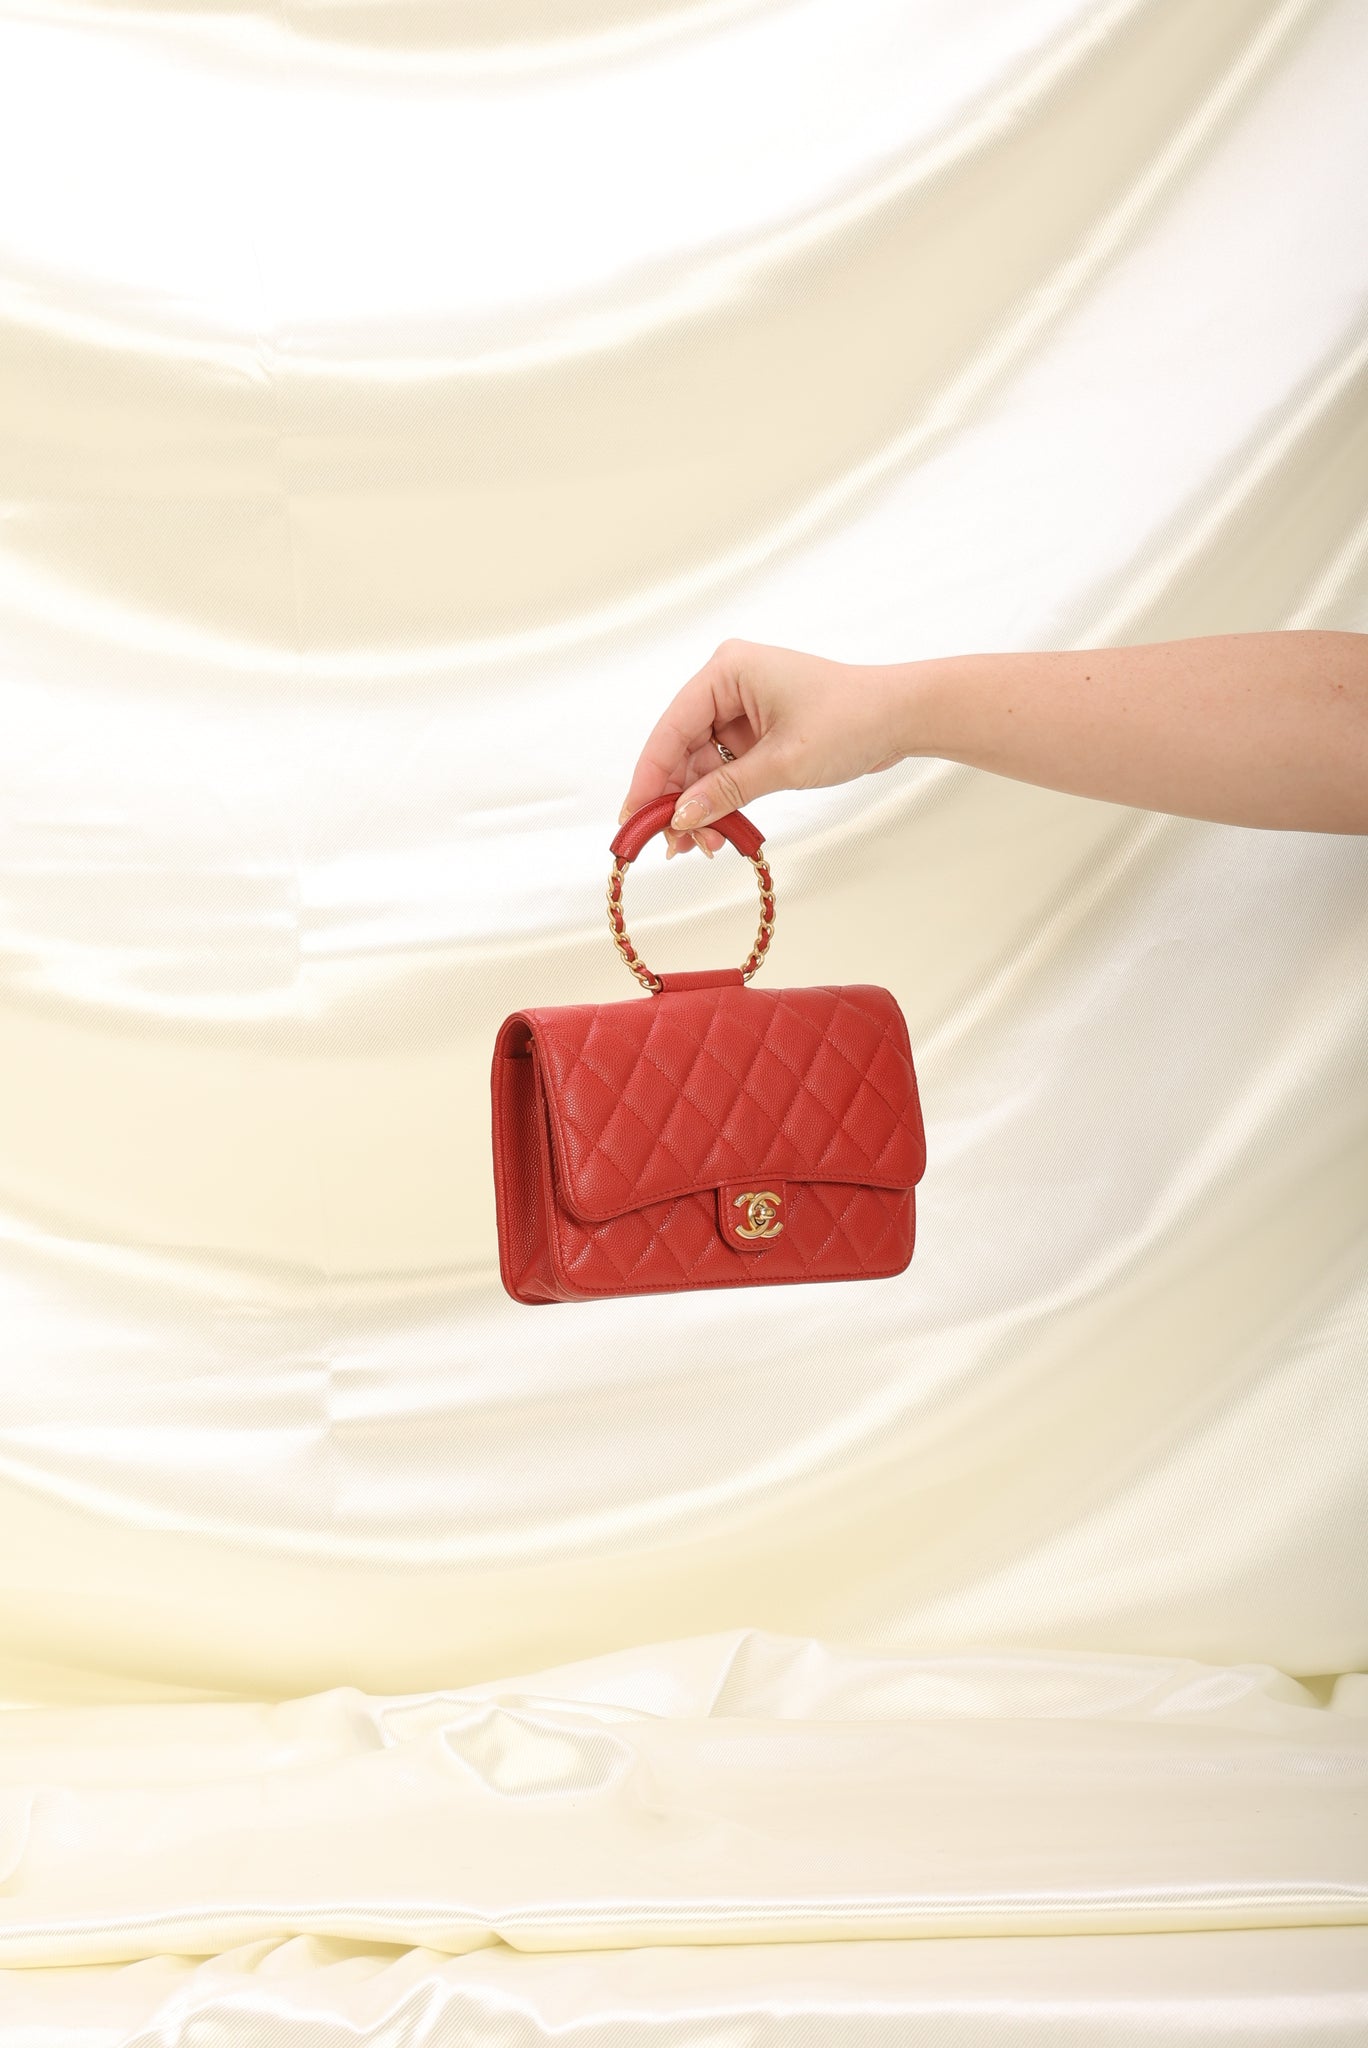 mini chanel bag vintage red